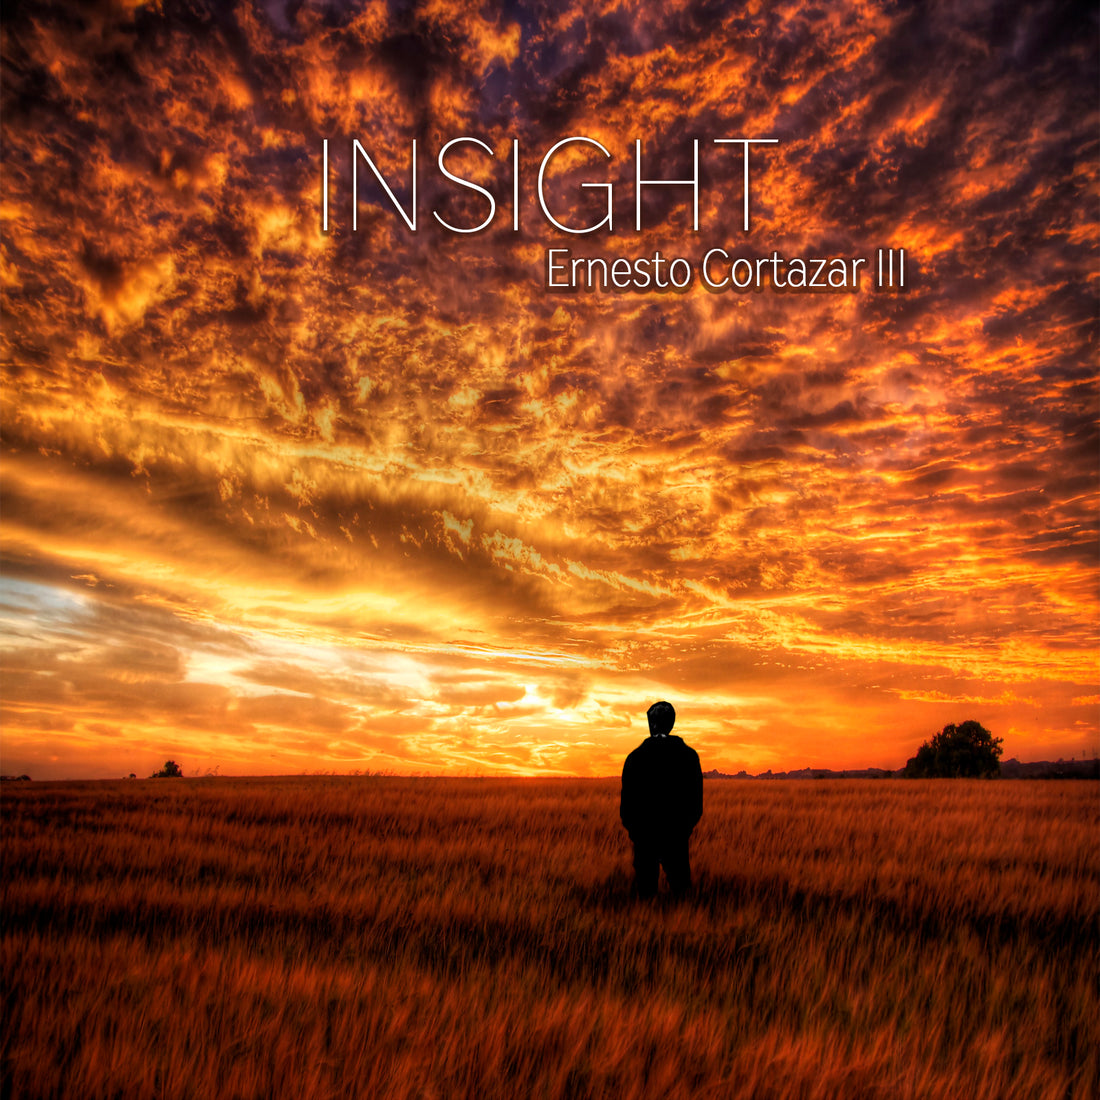 "Insight" by Ernesto Cortazar III Now Available as MP3 Album on ErnestoCortazar.net